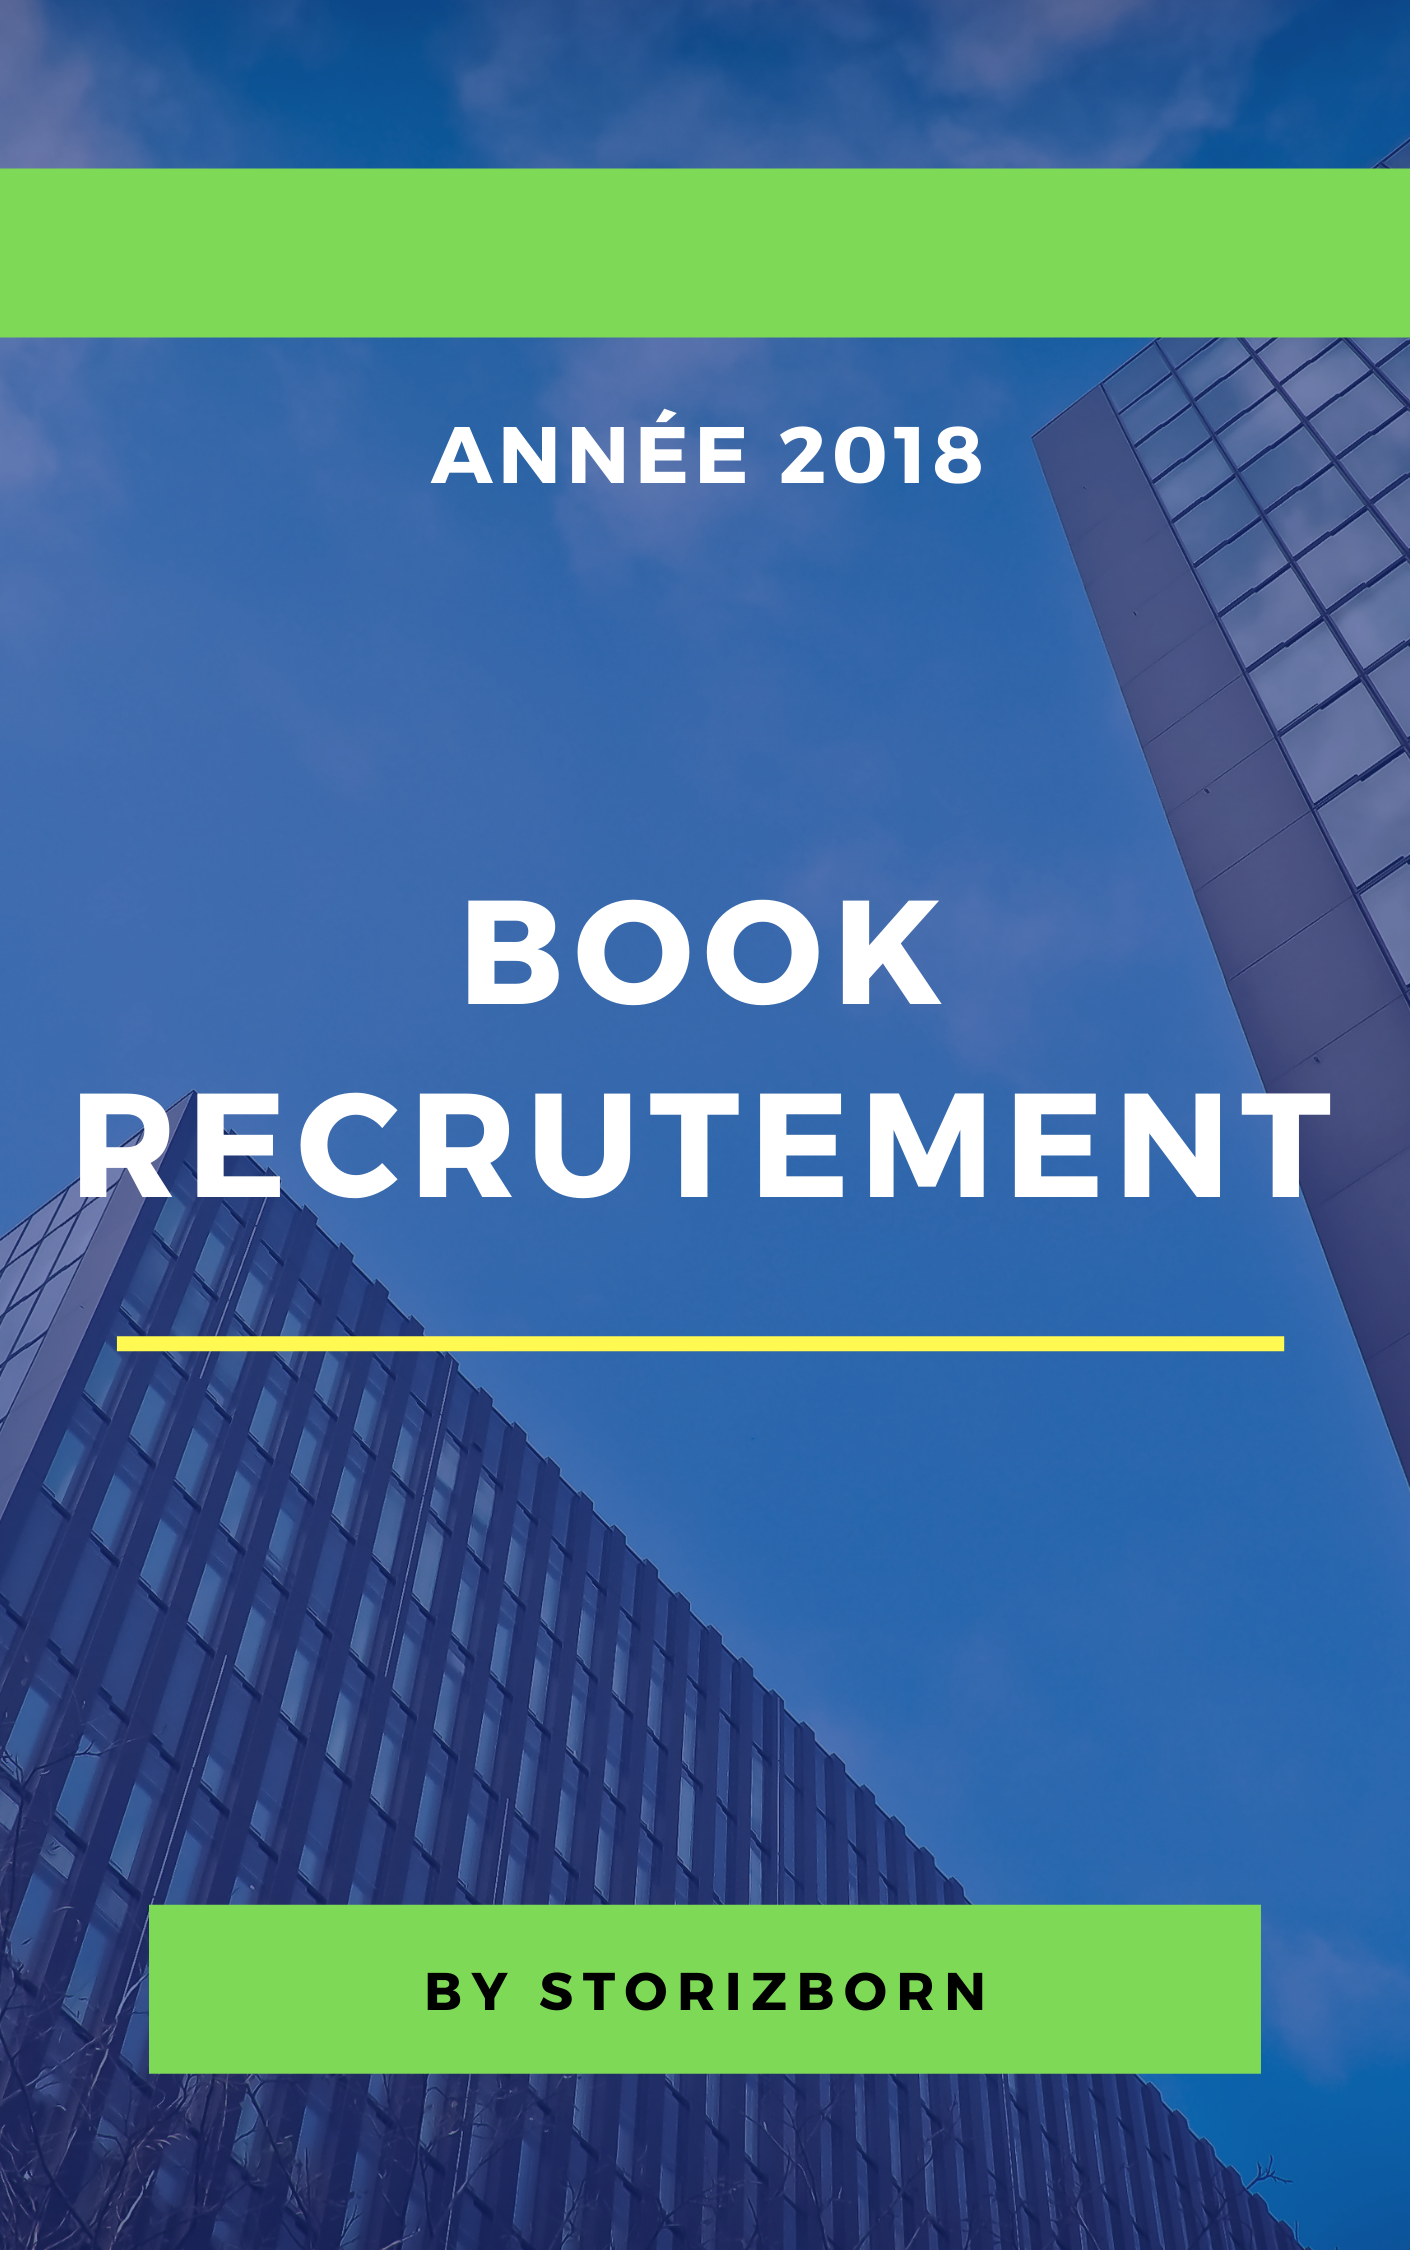 E-book recrutement 2018